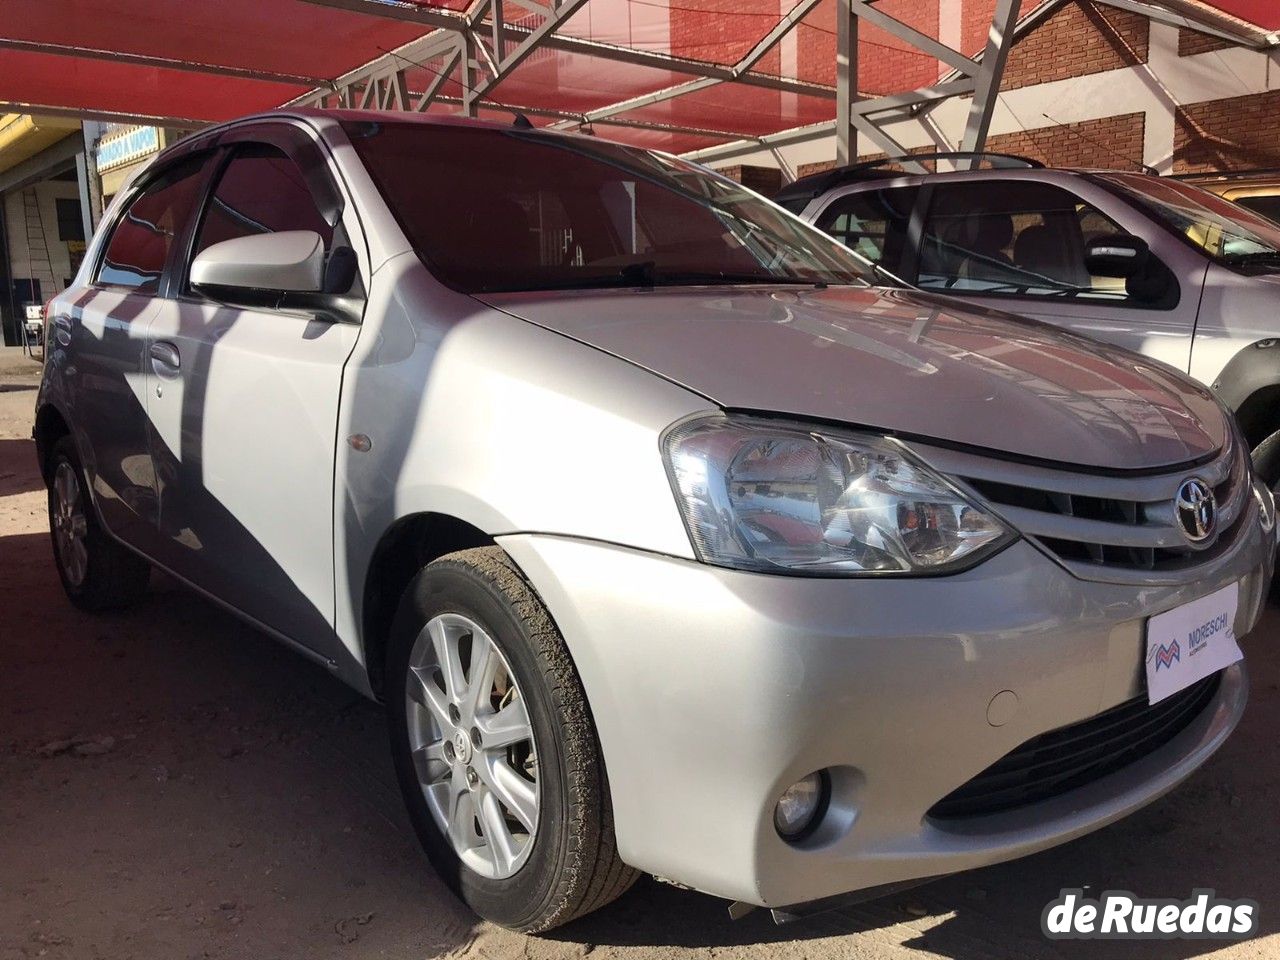 Toyota Etios Usado en Cordoba, deRuedas